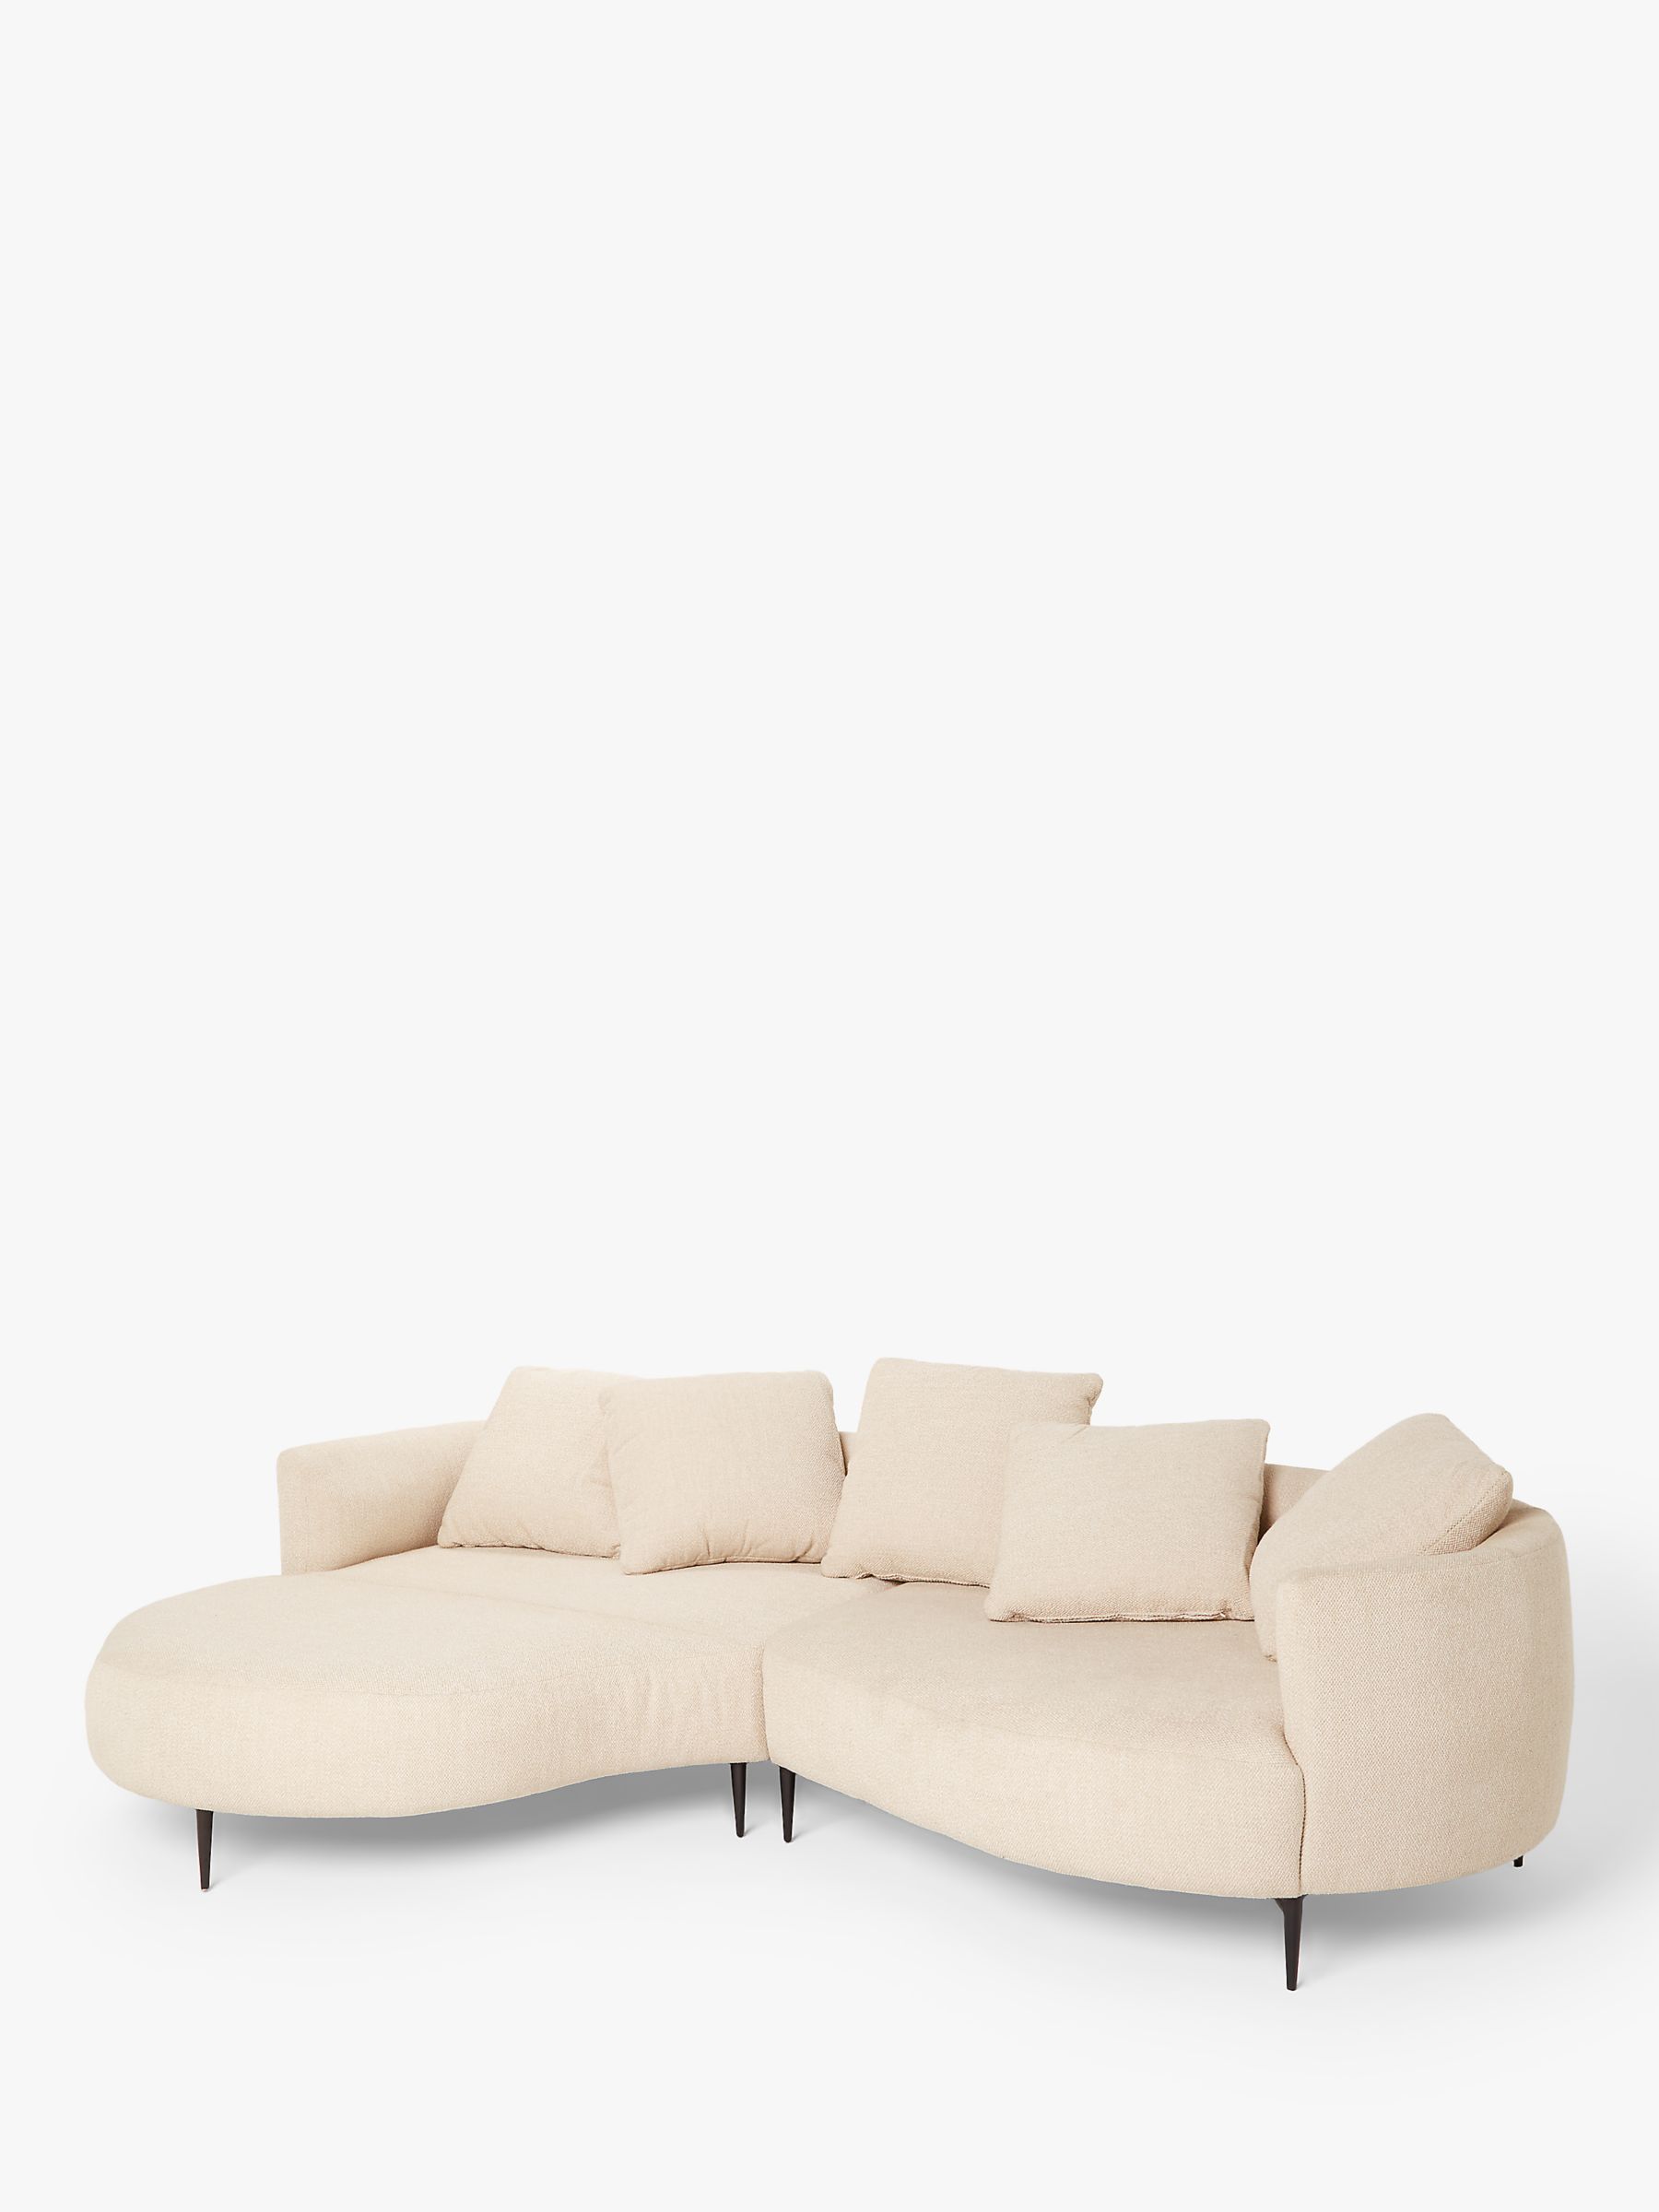 Contemporary relaxing armchair - YOGA - JORI - leather / fabric / steel